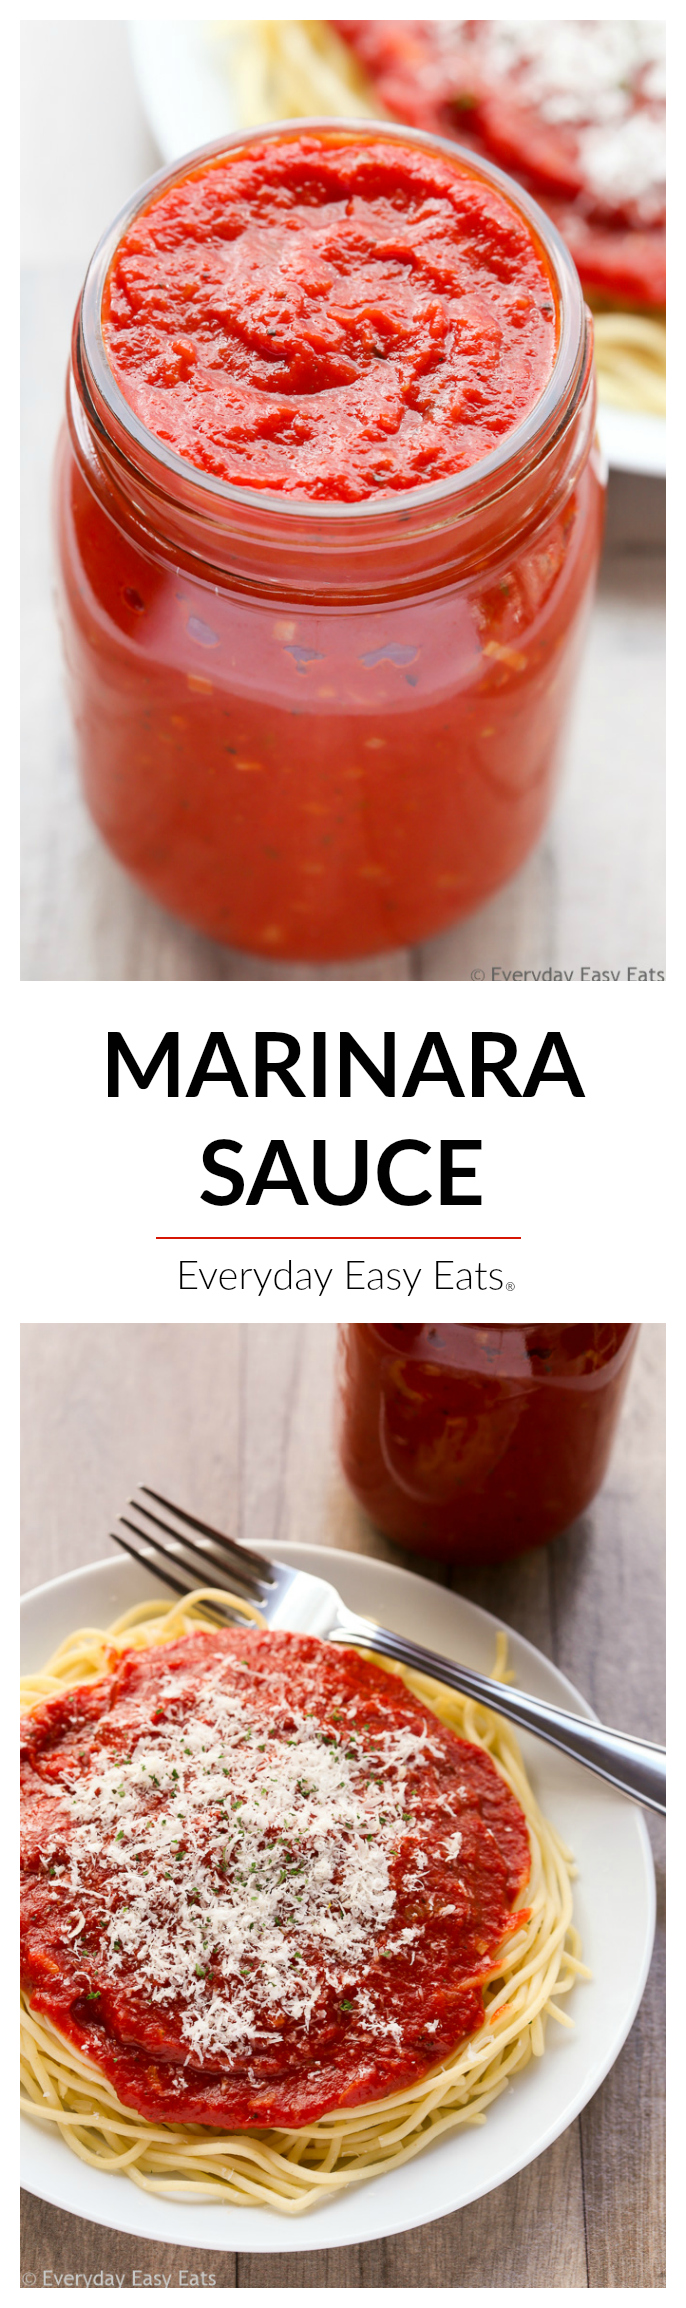 20-Minute Homemade Marinara Sauce | Recipe at EverydayEasyEats.com